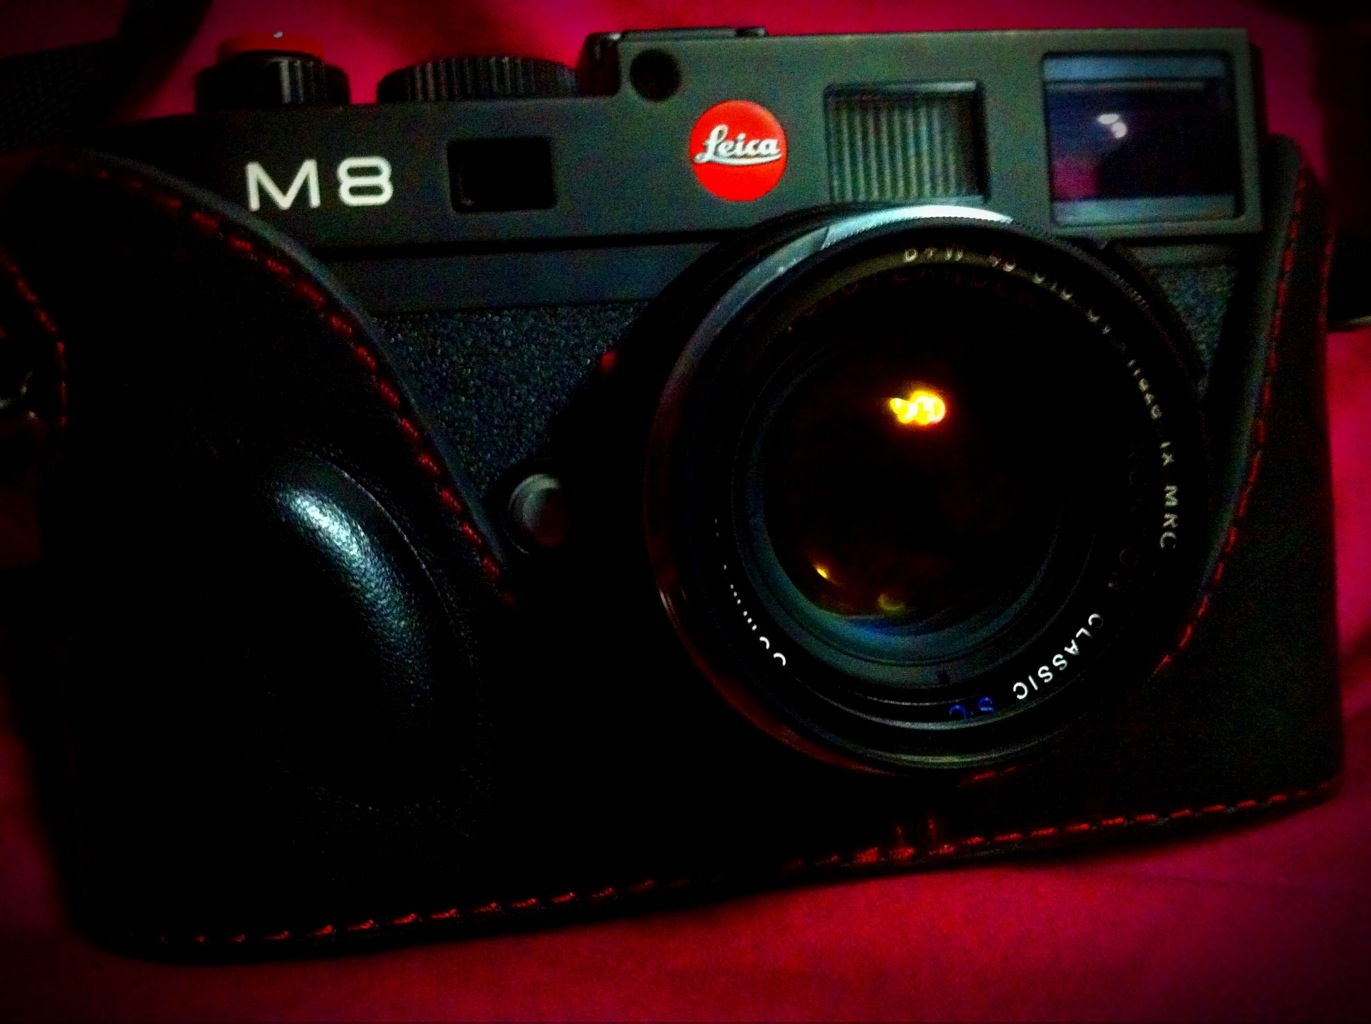 My first Leica